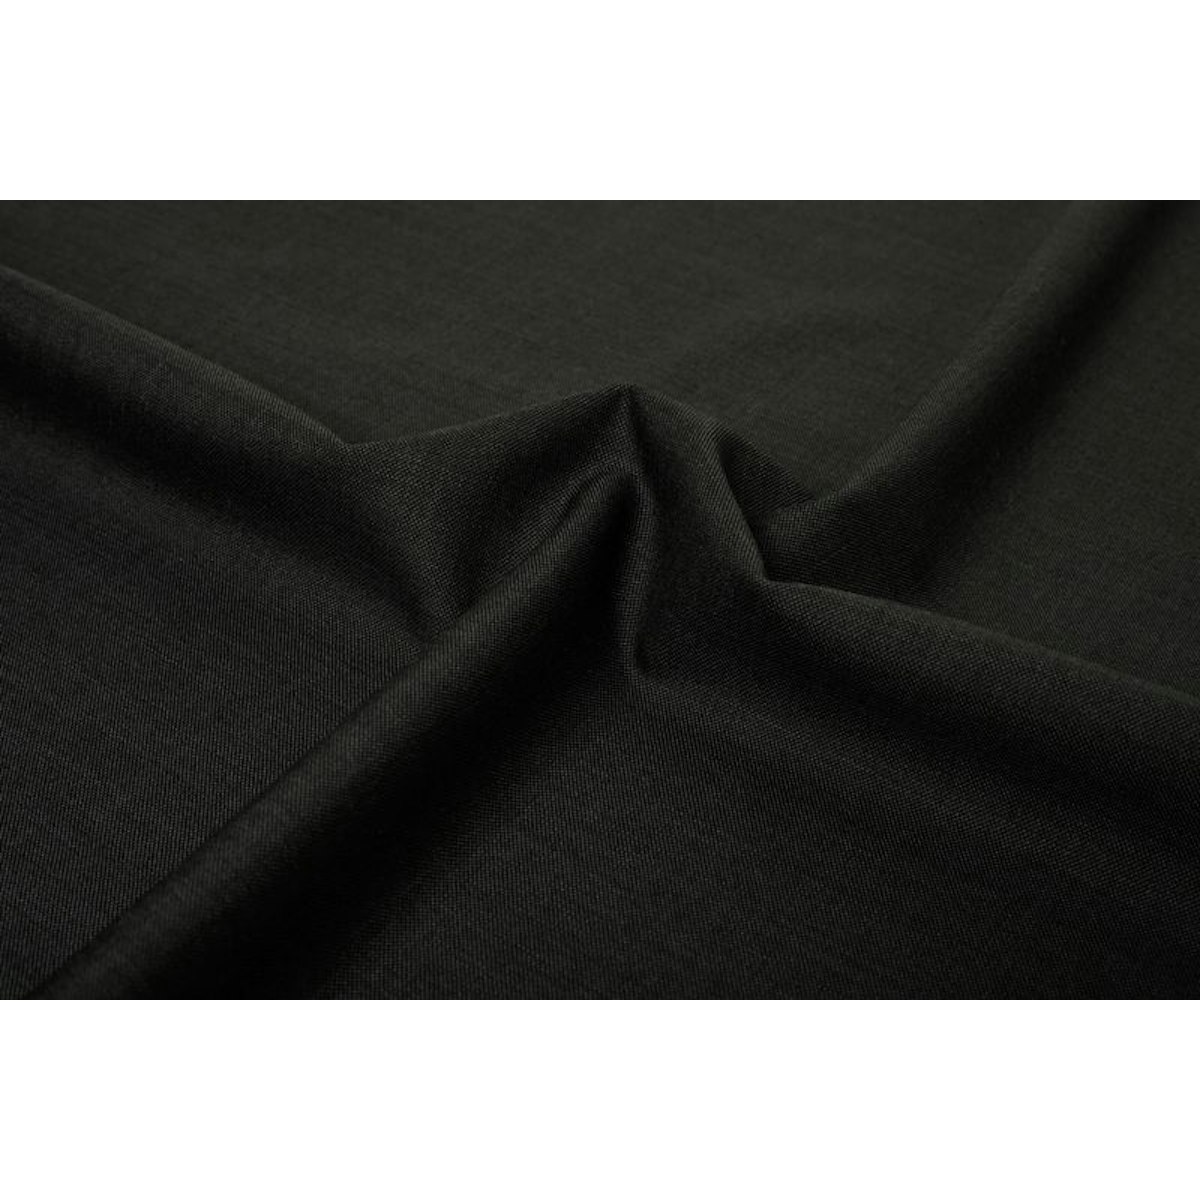 InStitchu Suit Fabric 38